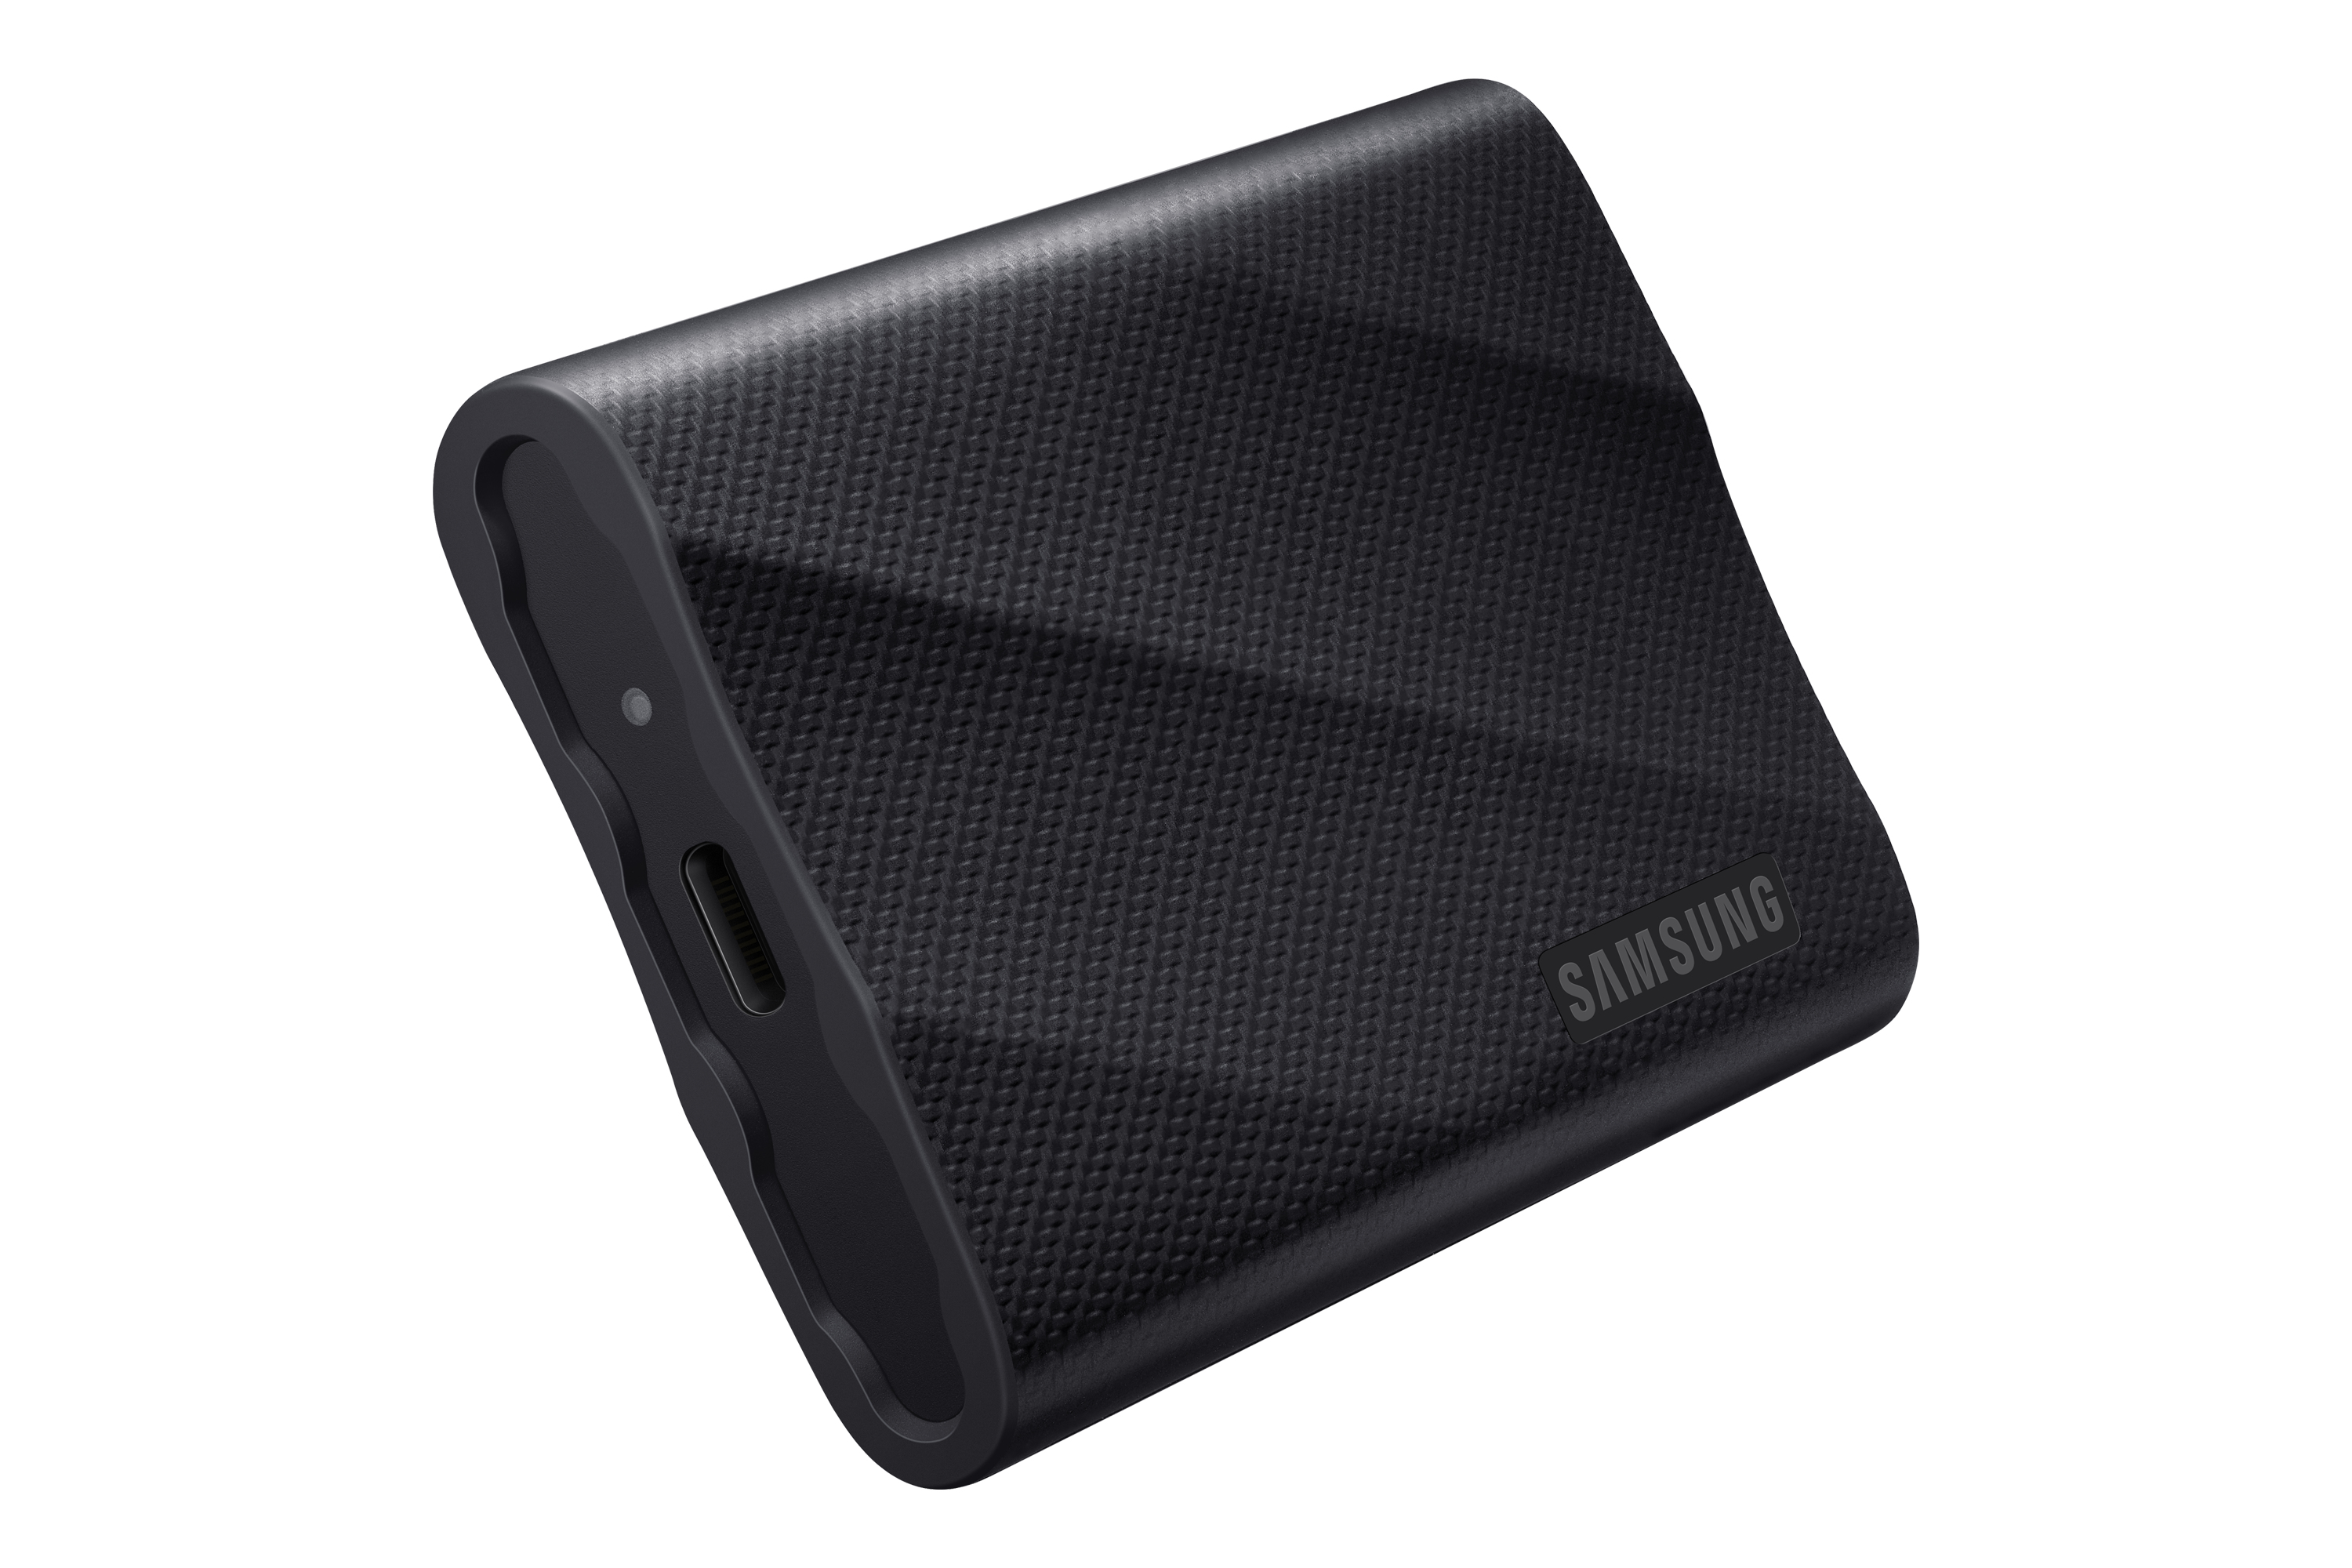 Samsung - SSD Externo Samsung Portable T9 2TB USB3.2 Gen2 Negro (2000/1950MB/s)